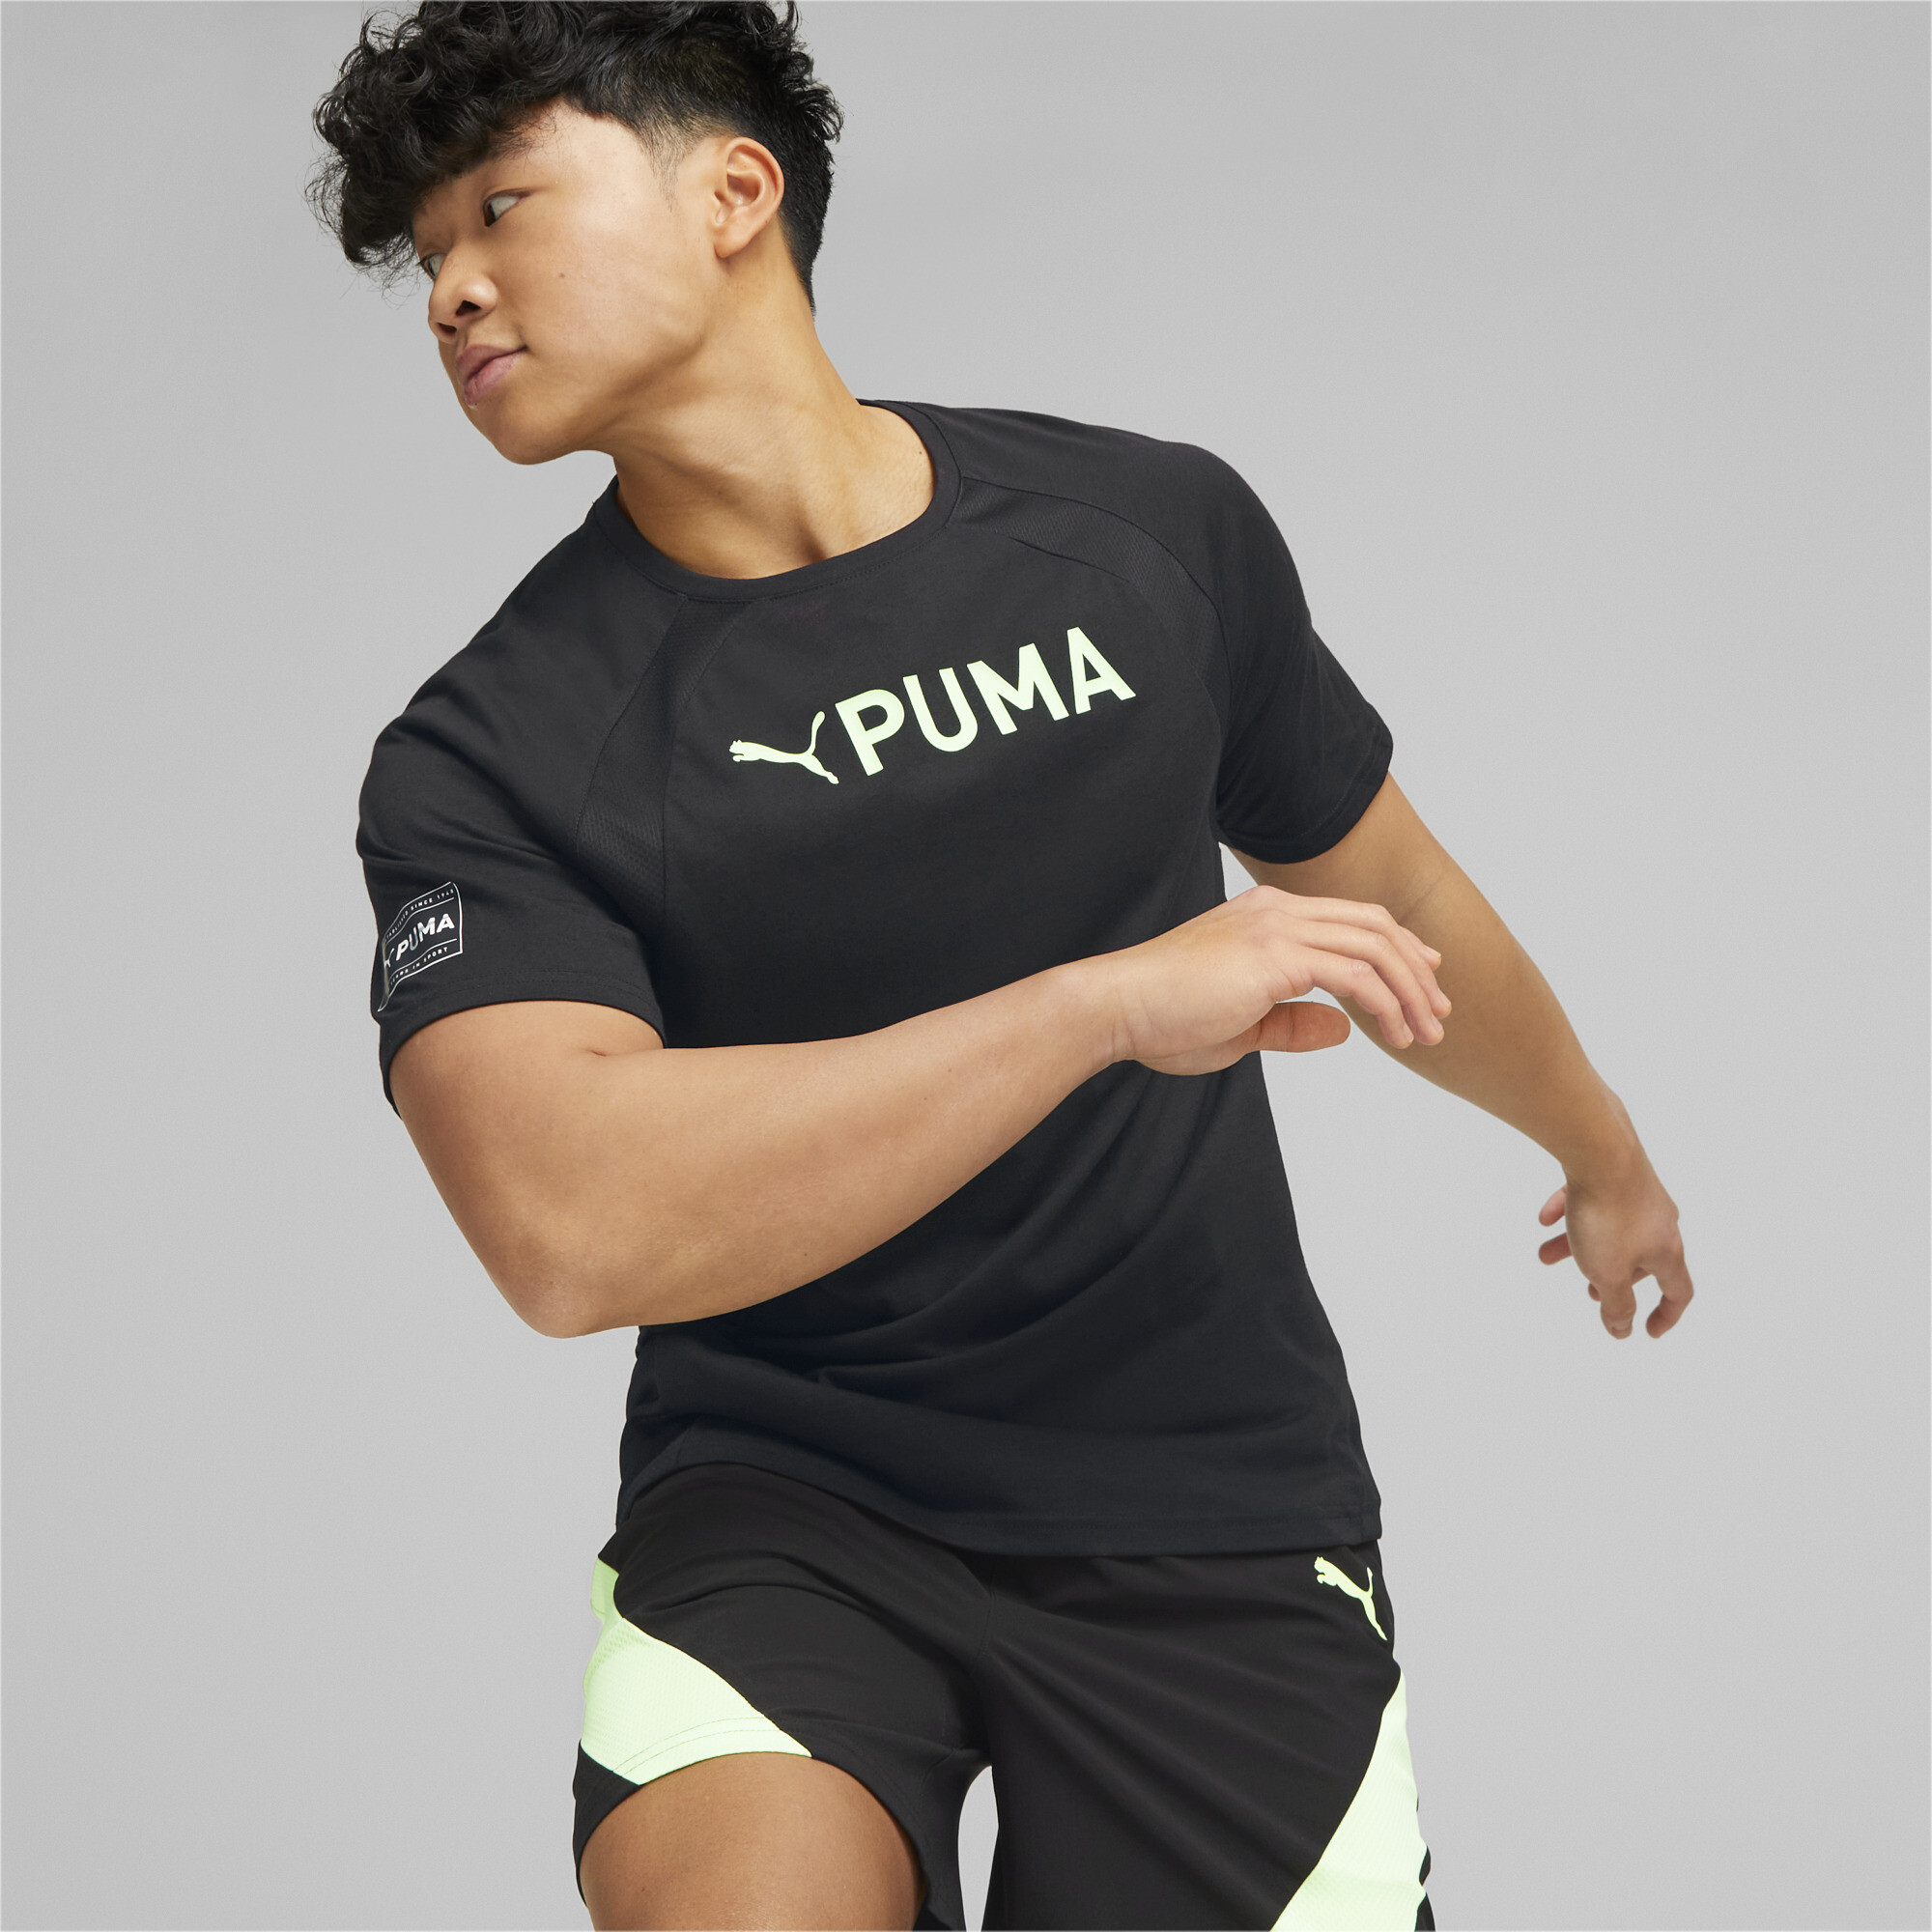 Men's PUMA Fit Ultrabreathe Triblend Training T-Shirt Men In Black, Size Medium